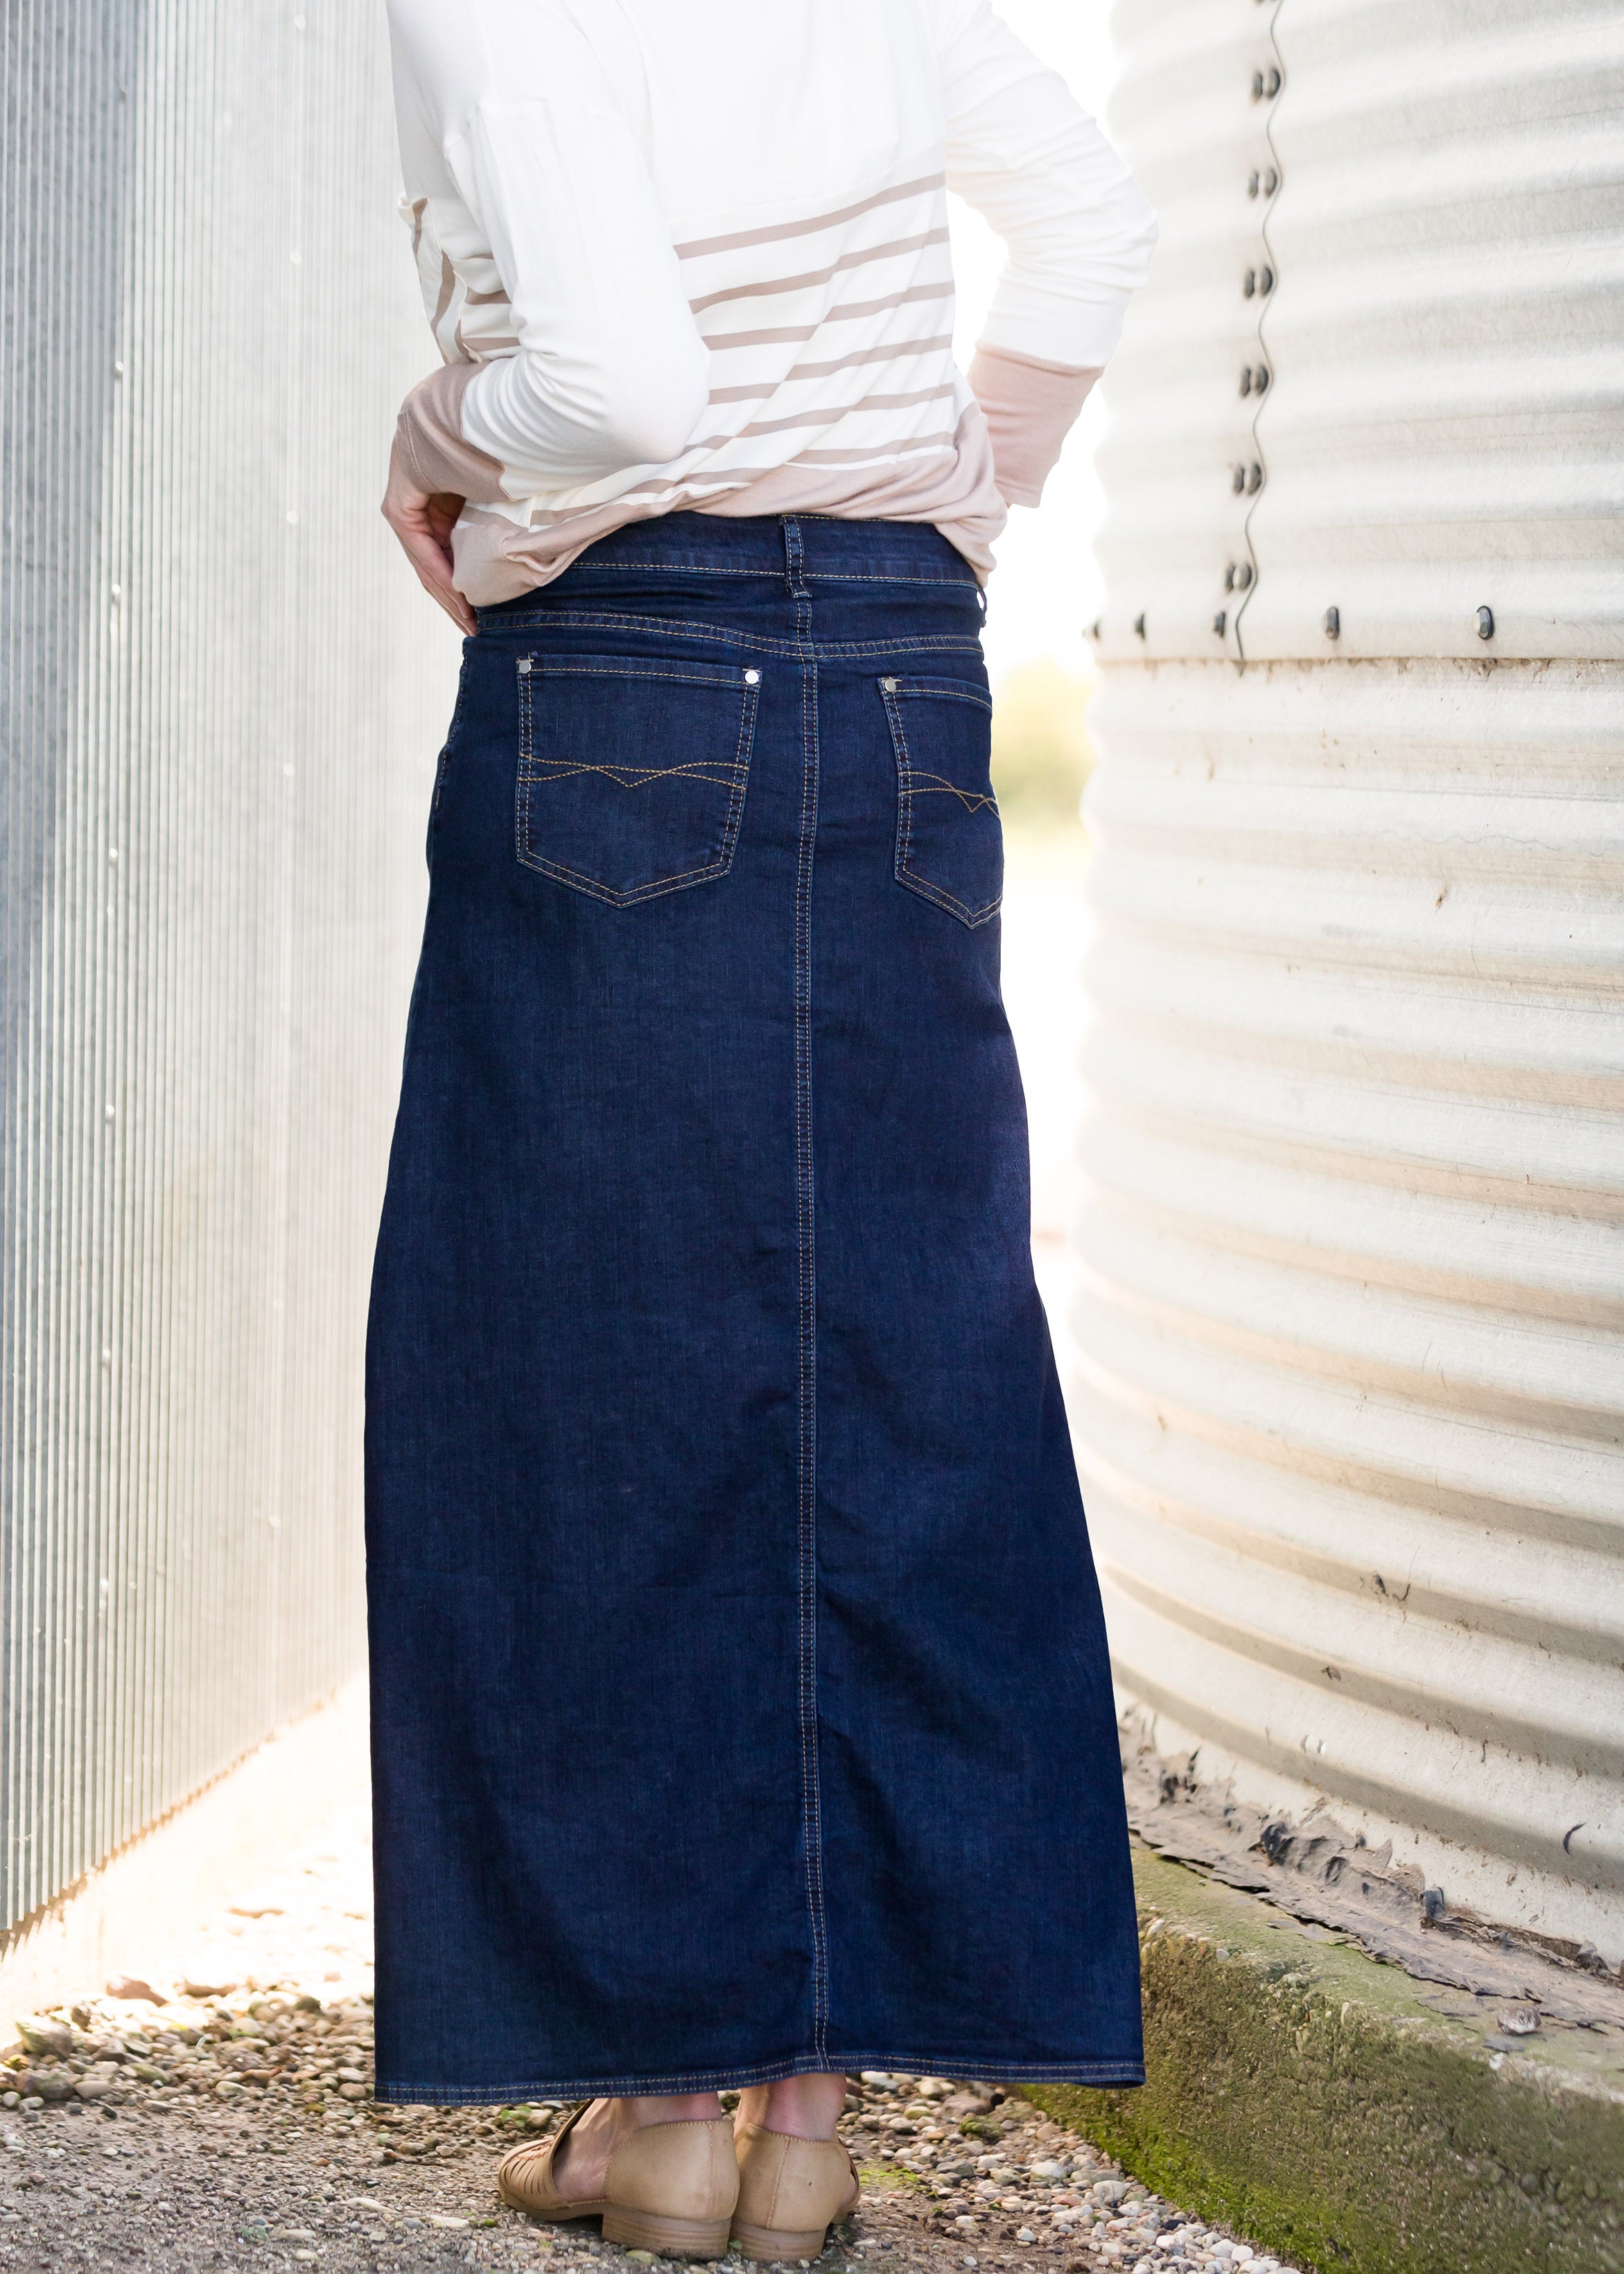 Shop Spring 2023's Favorite Fashion Trend, AKA the Denim Maxi Skirt